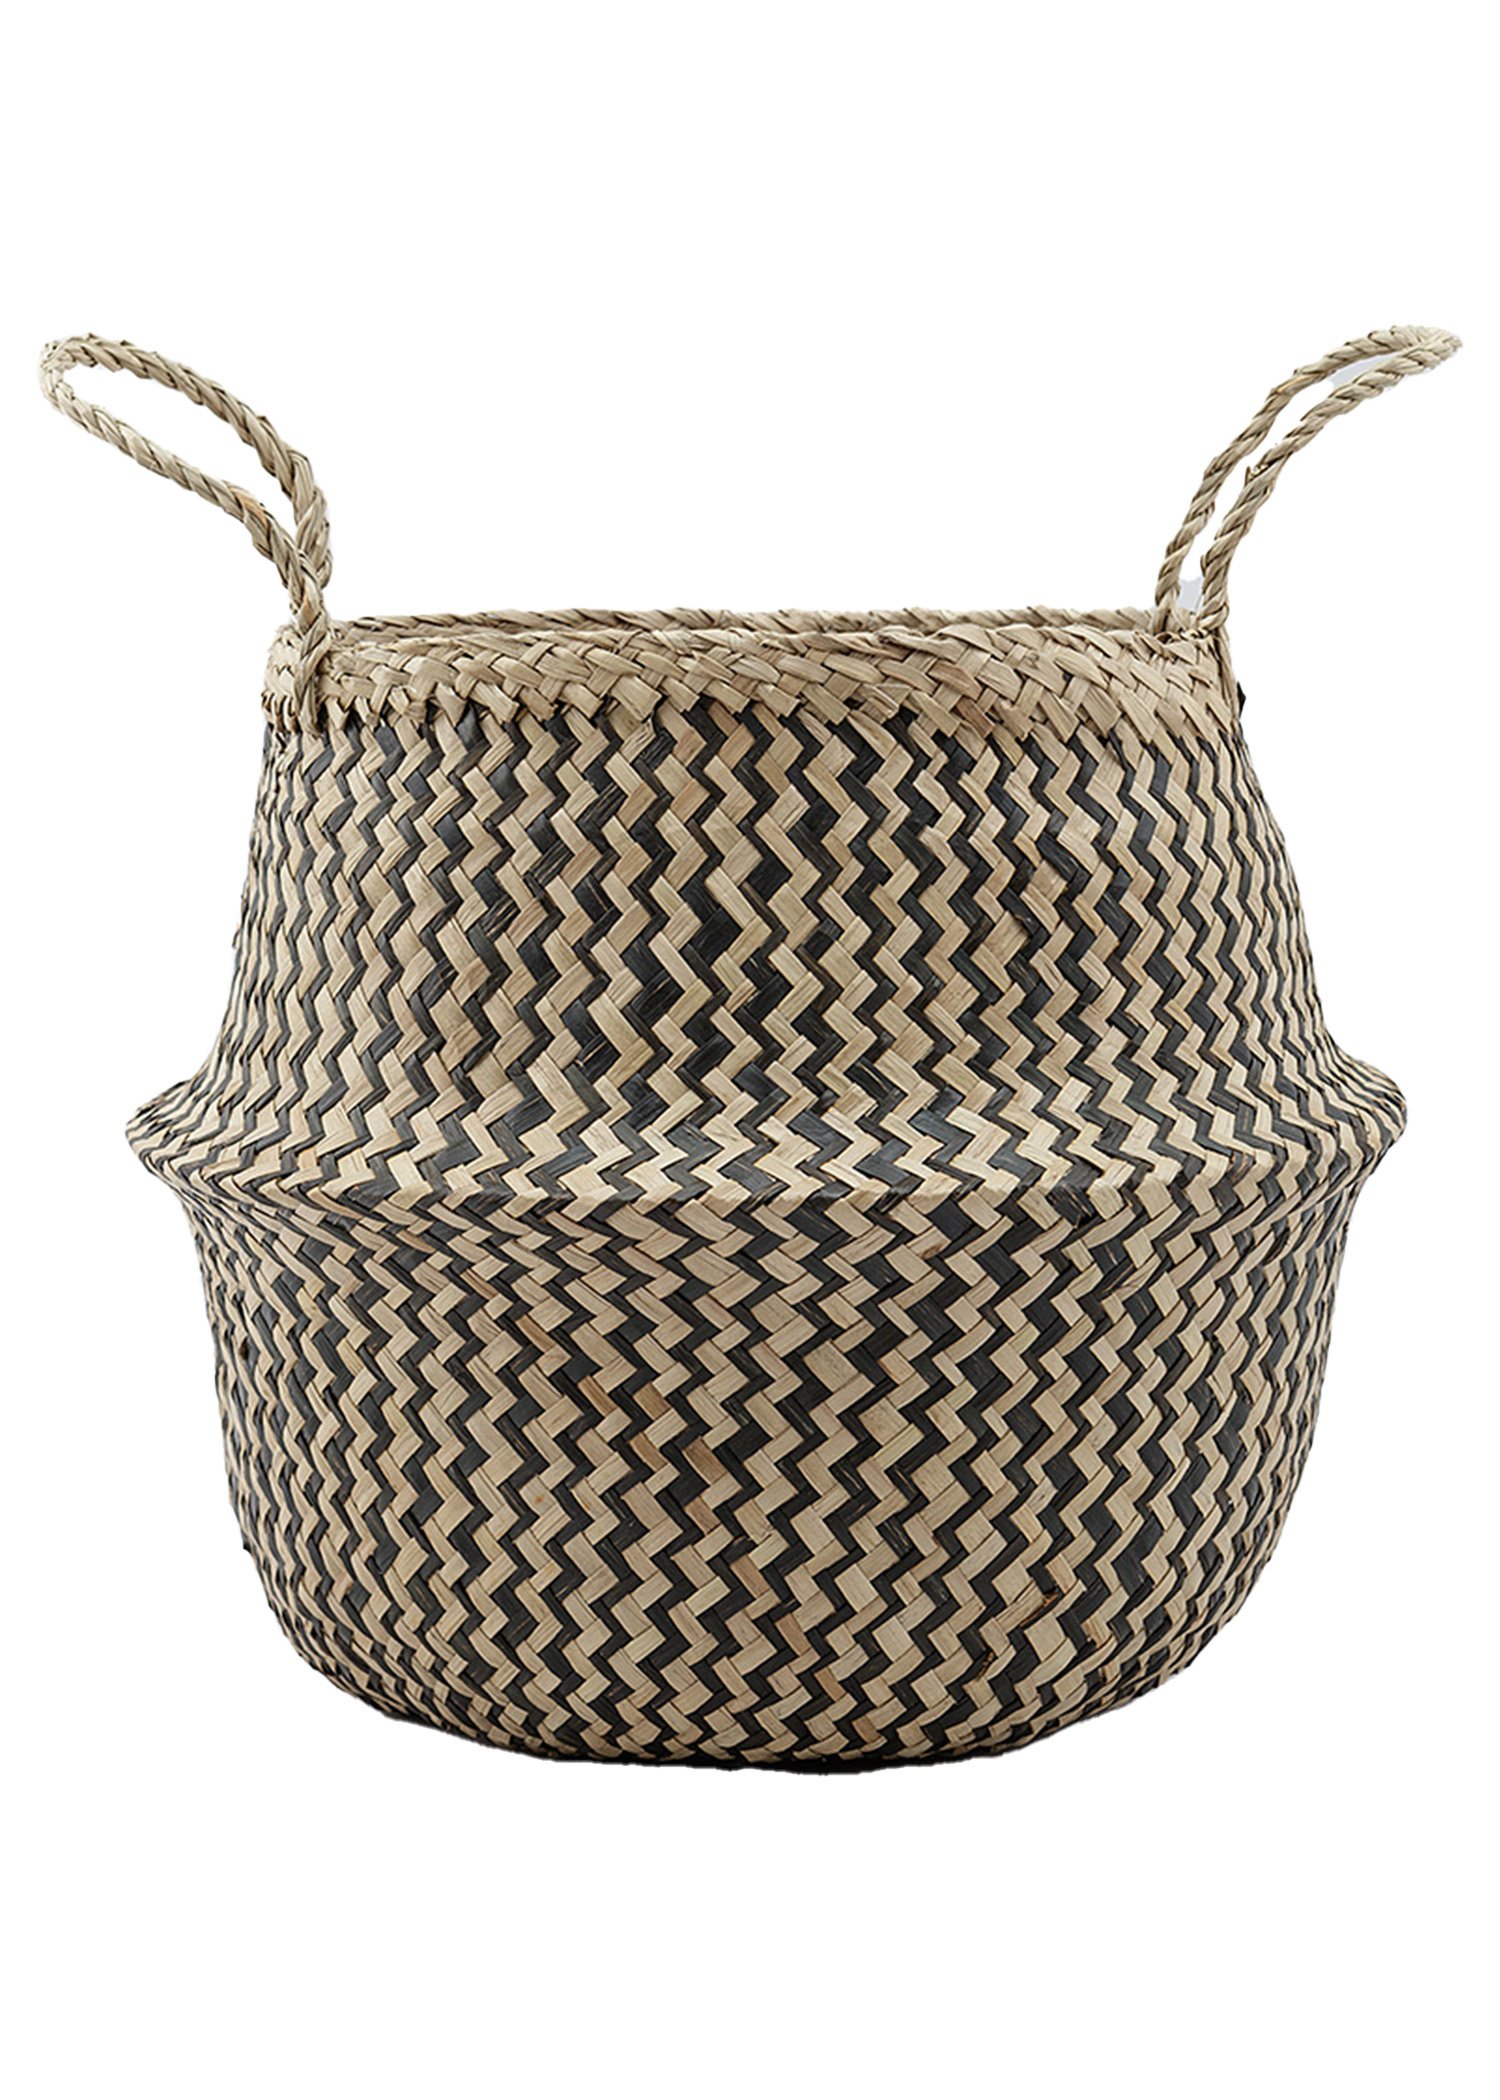 Seaweed basket Image 0